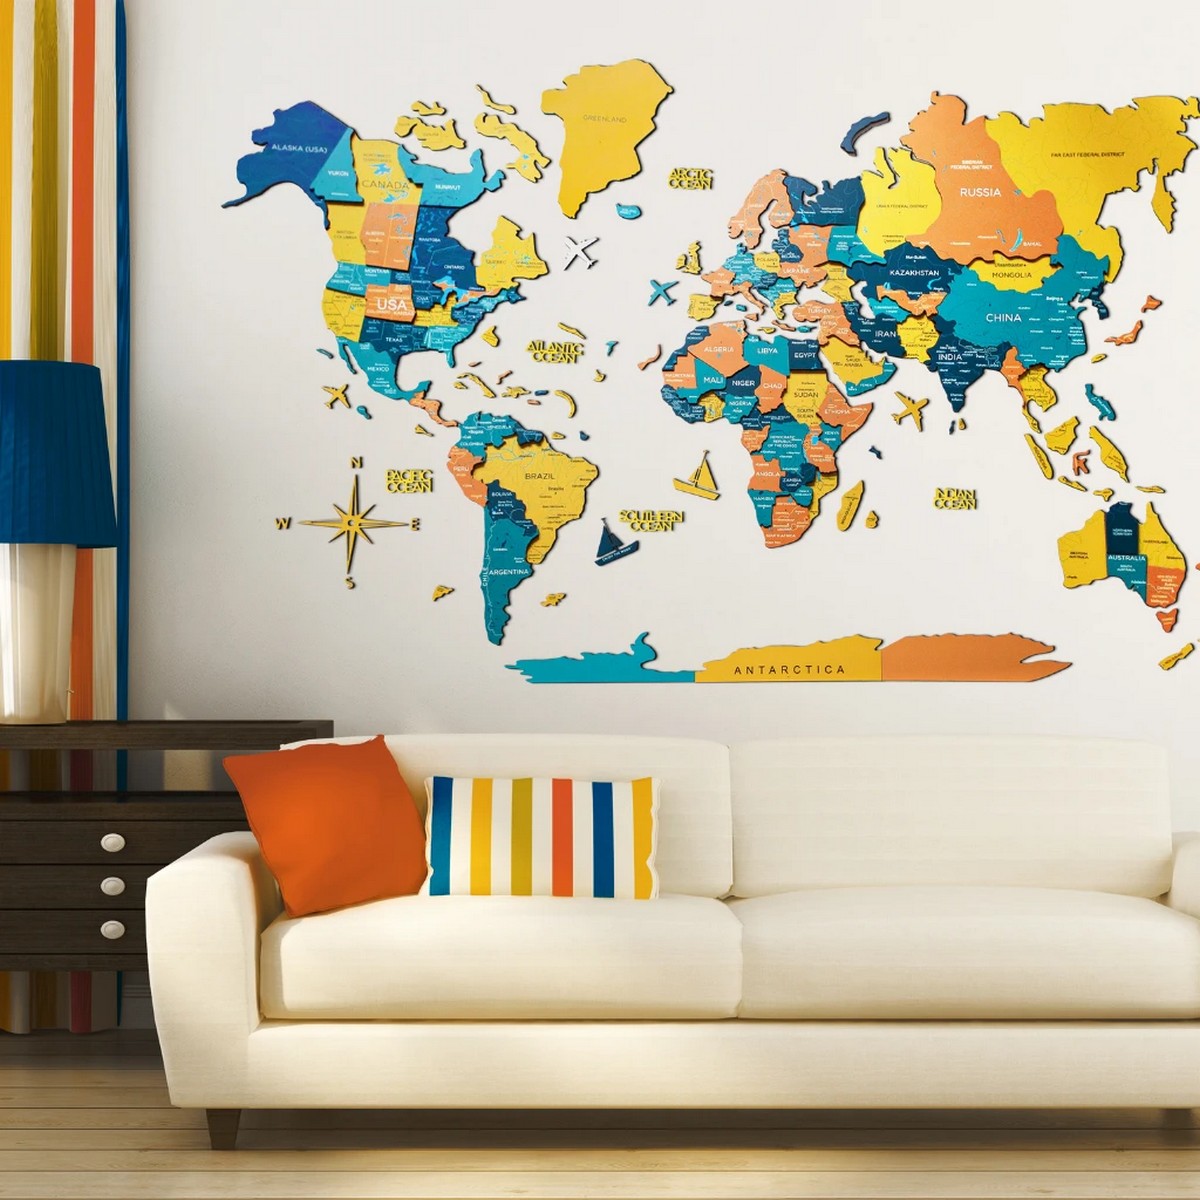 نقشه رنگی روی دیوار چوبی سه بعدی